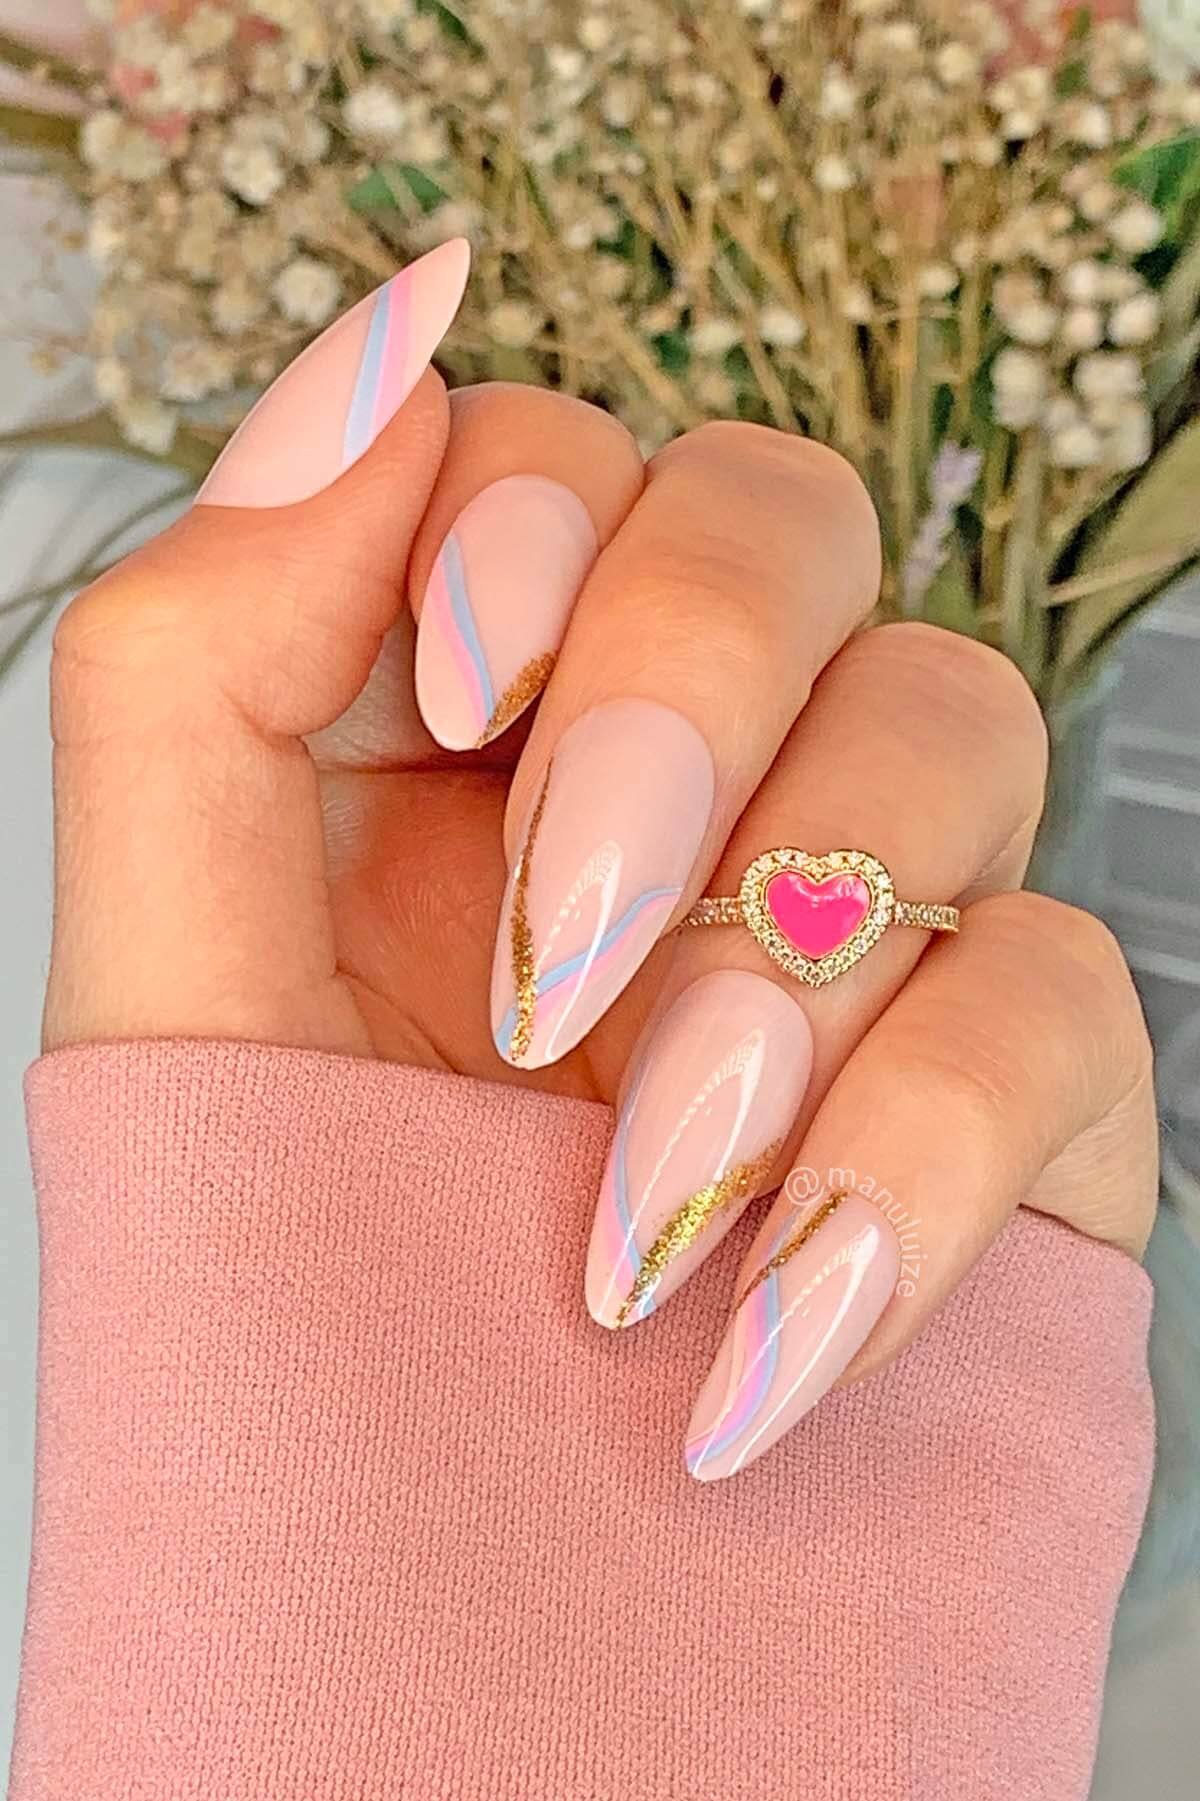 Chic summer nails